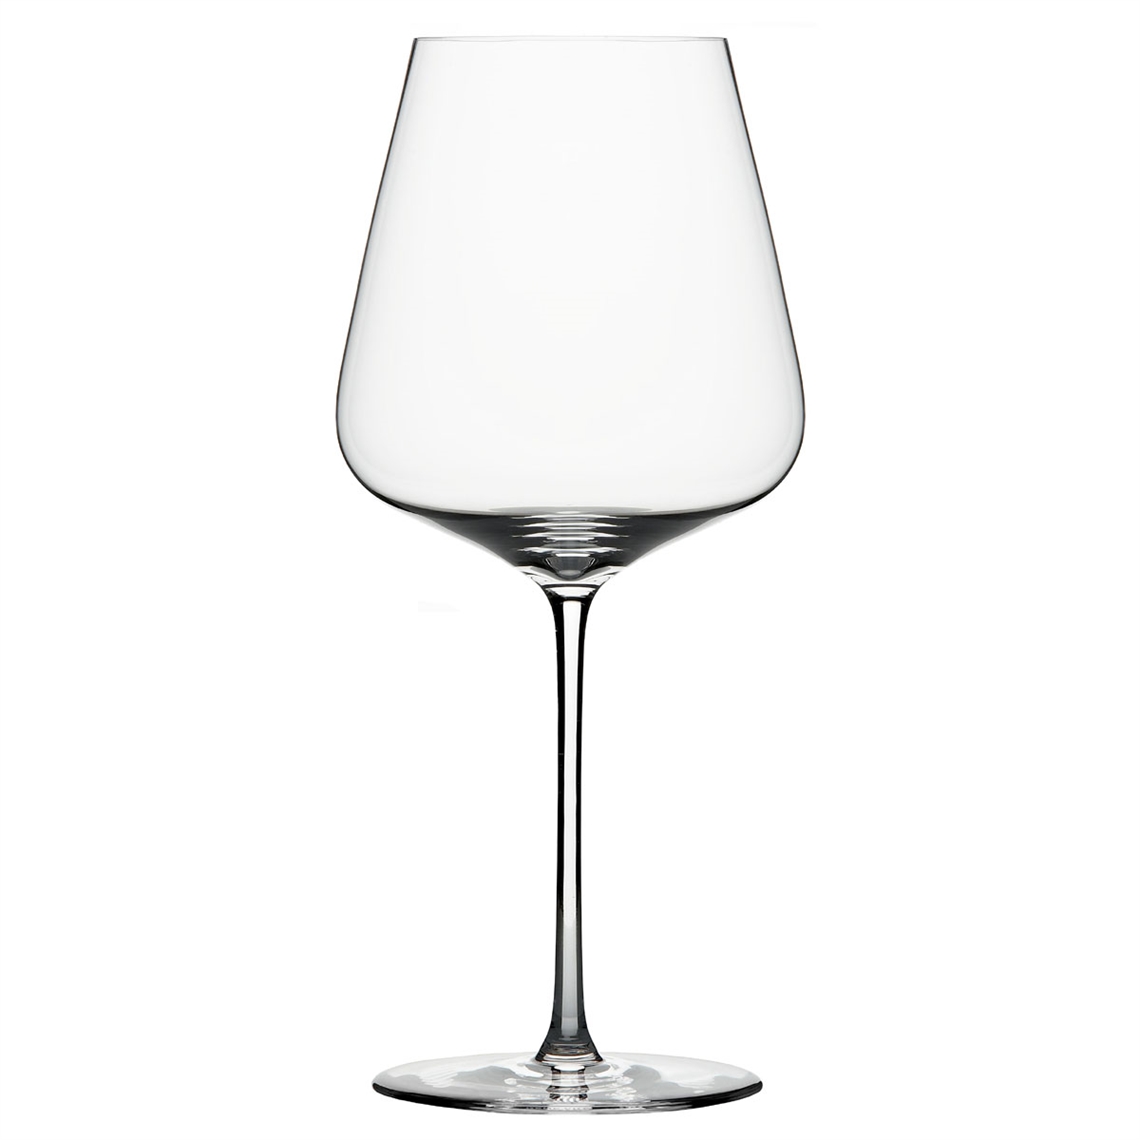 View more rioja wine glasses from our Premium Mouth Blown Glassware range